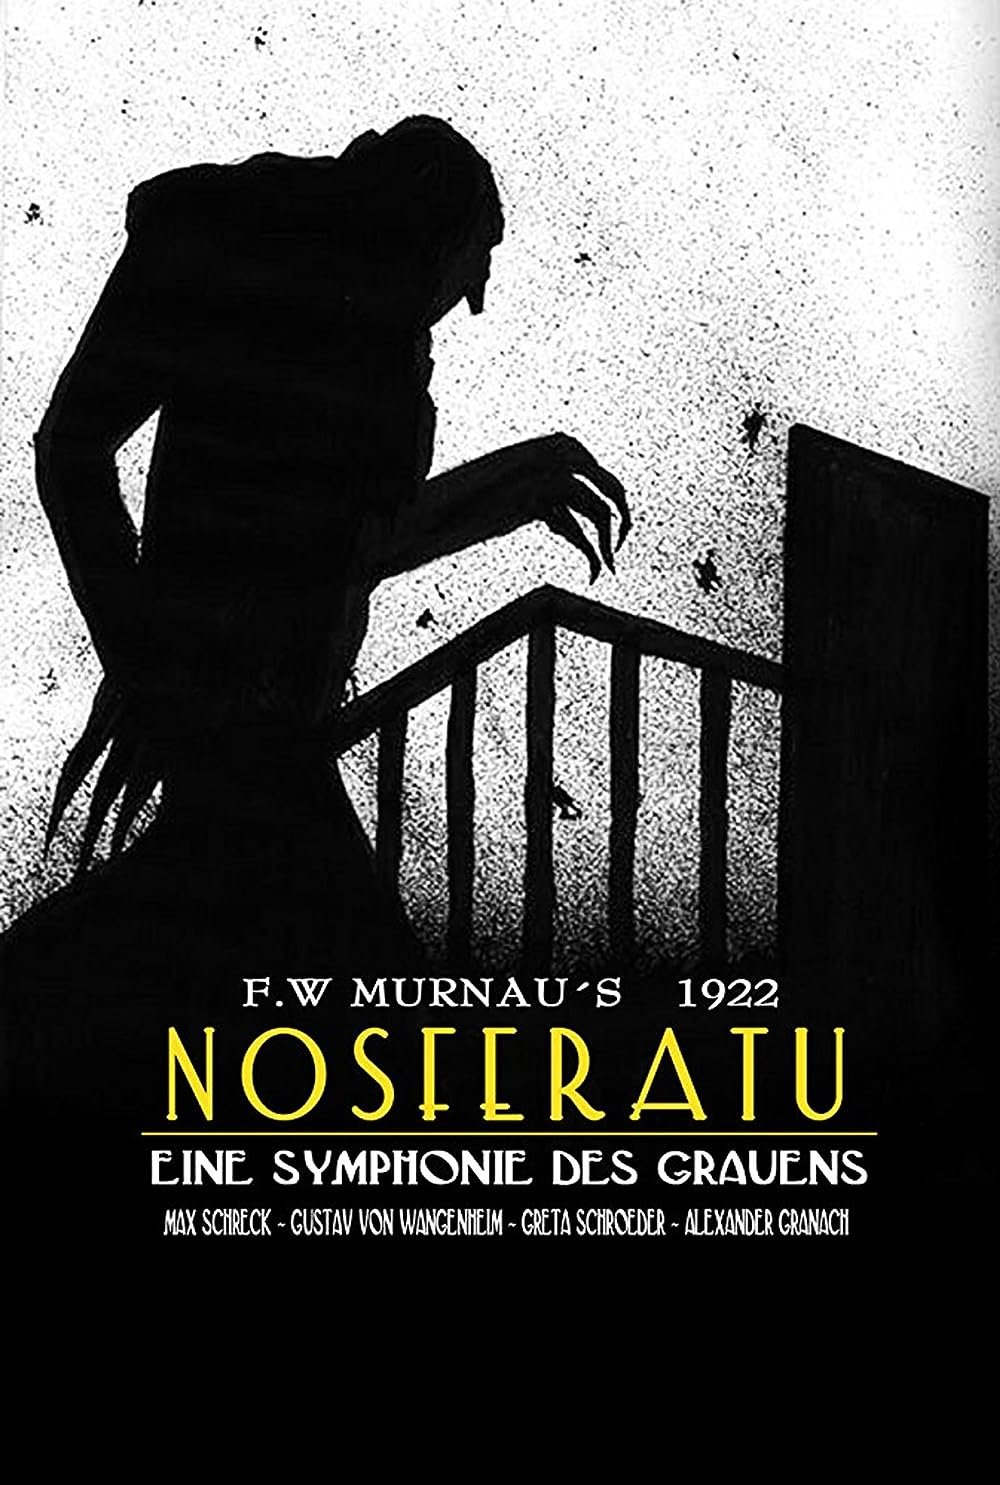 41) Nosferatu (1922) - IMDb: 7.9